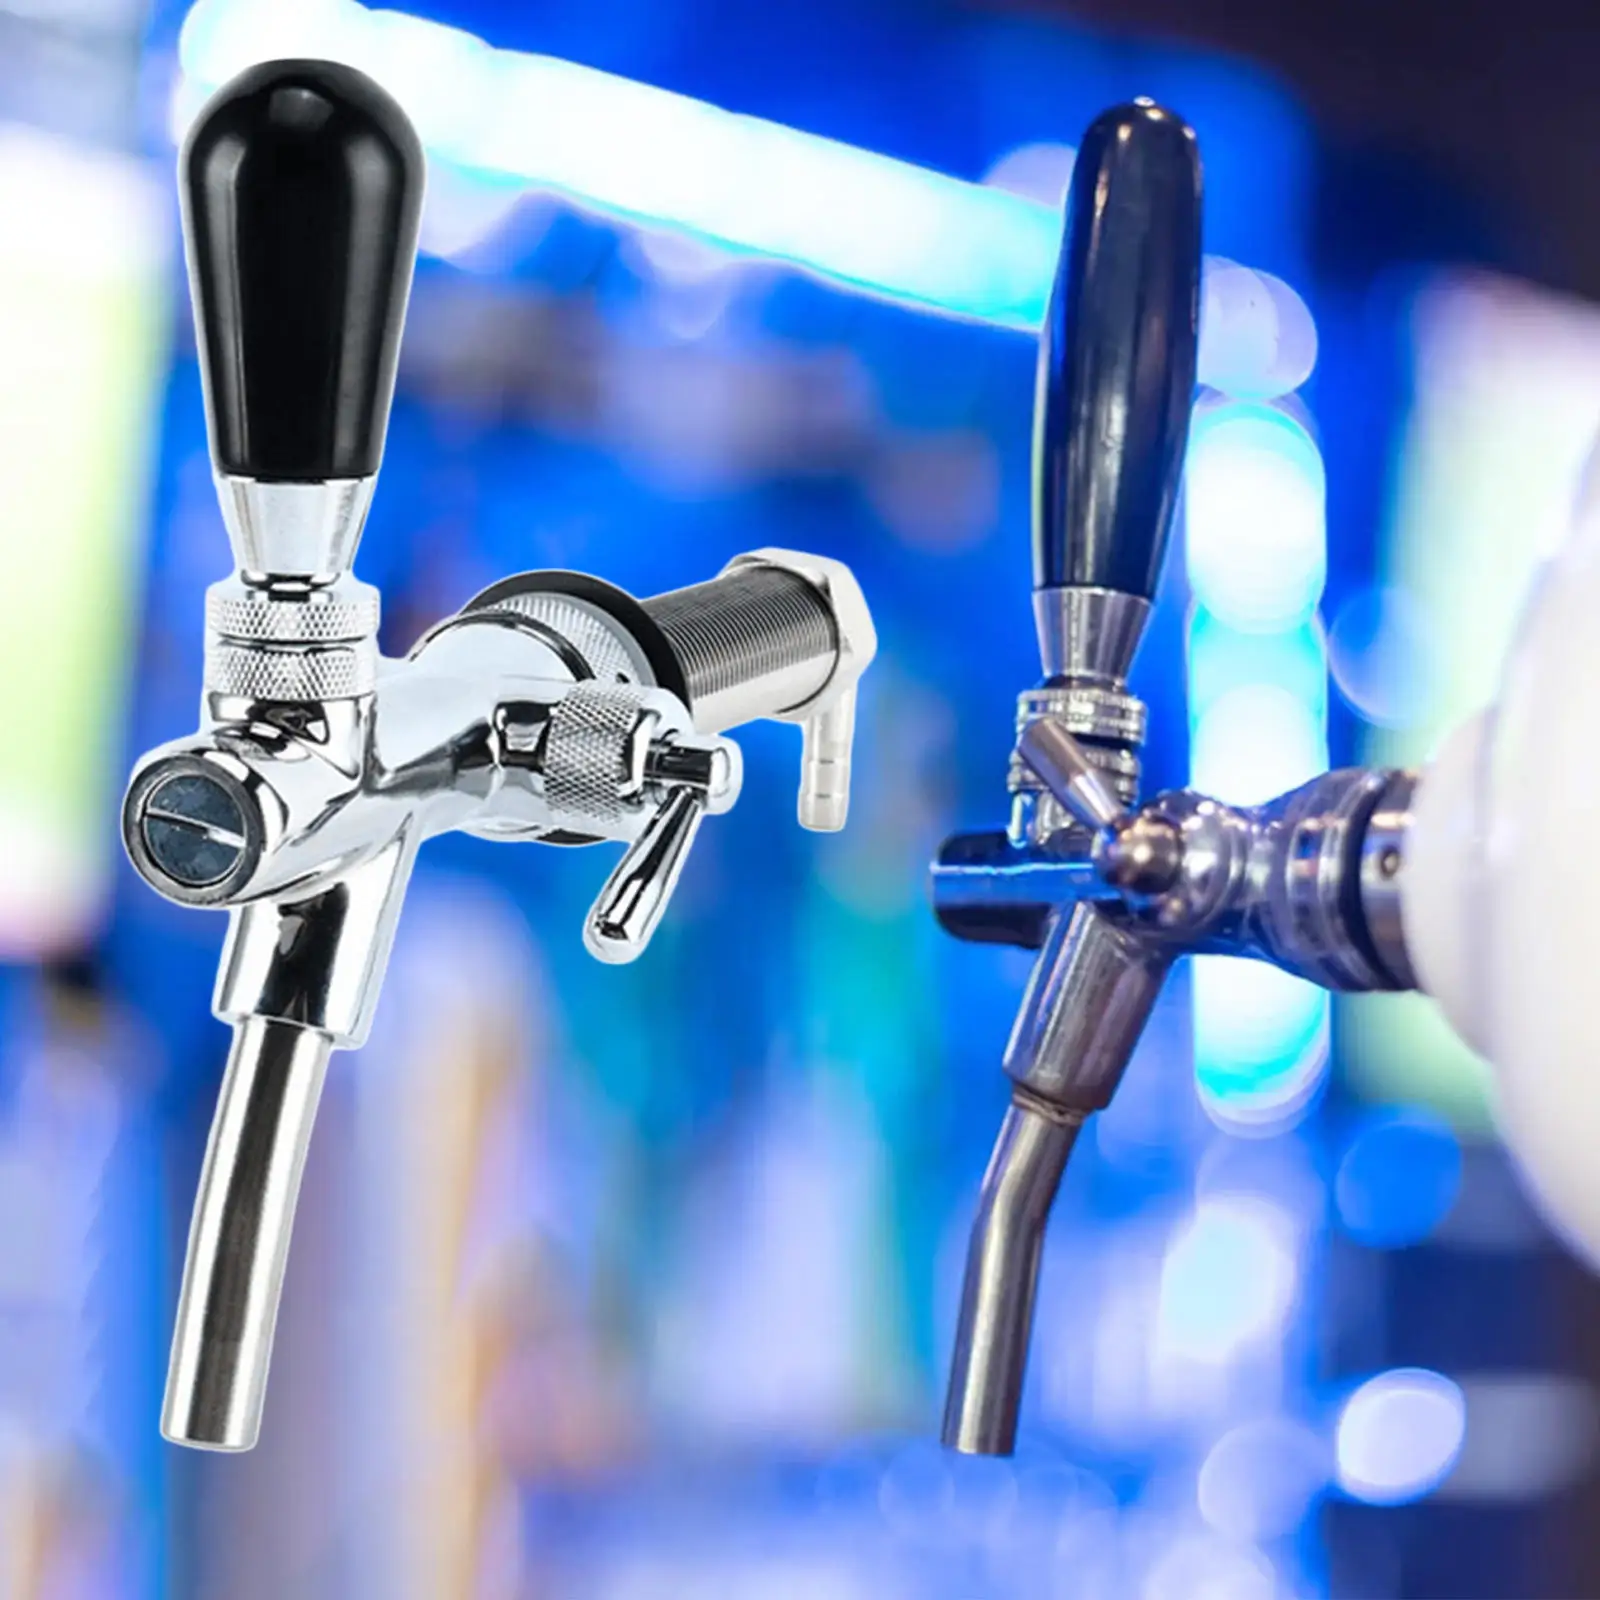 Stainless Steel Beer Faucet Draft Beer Faucet Beer Keg Tap Controllable Flow Longer Spout for Beer Kegging Homebrew Home Bar